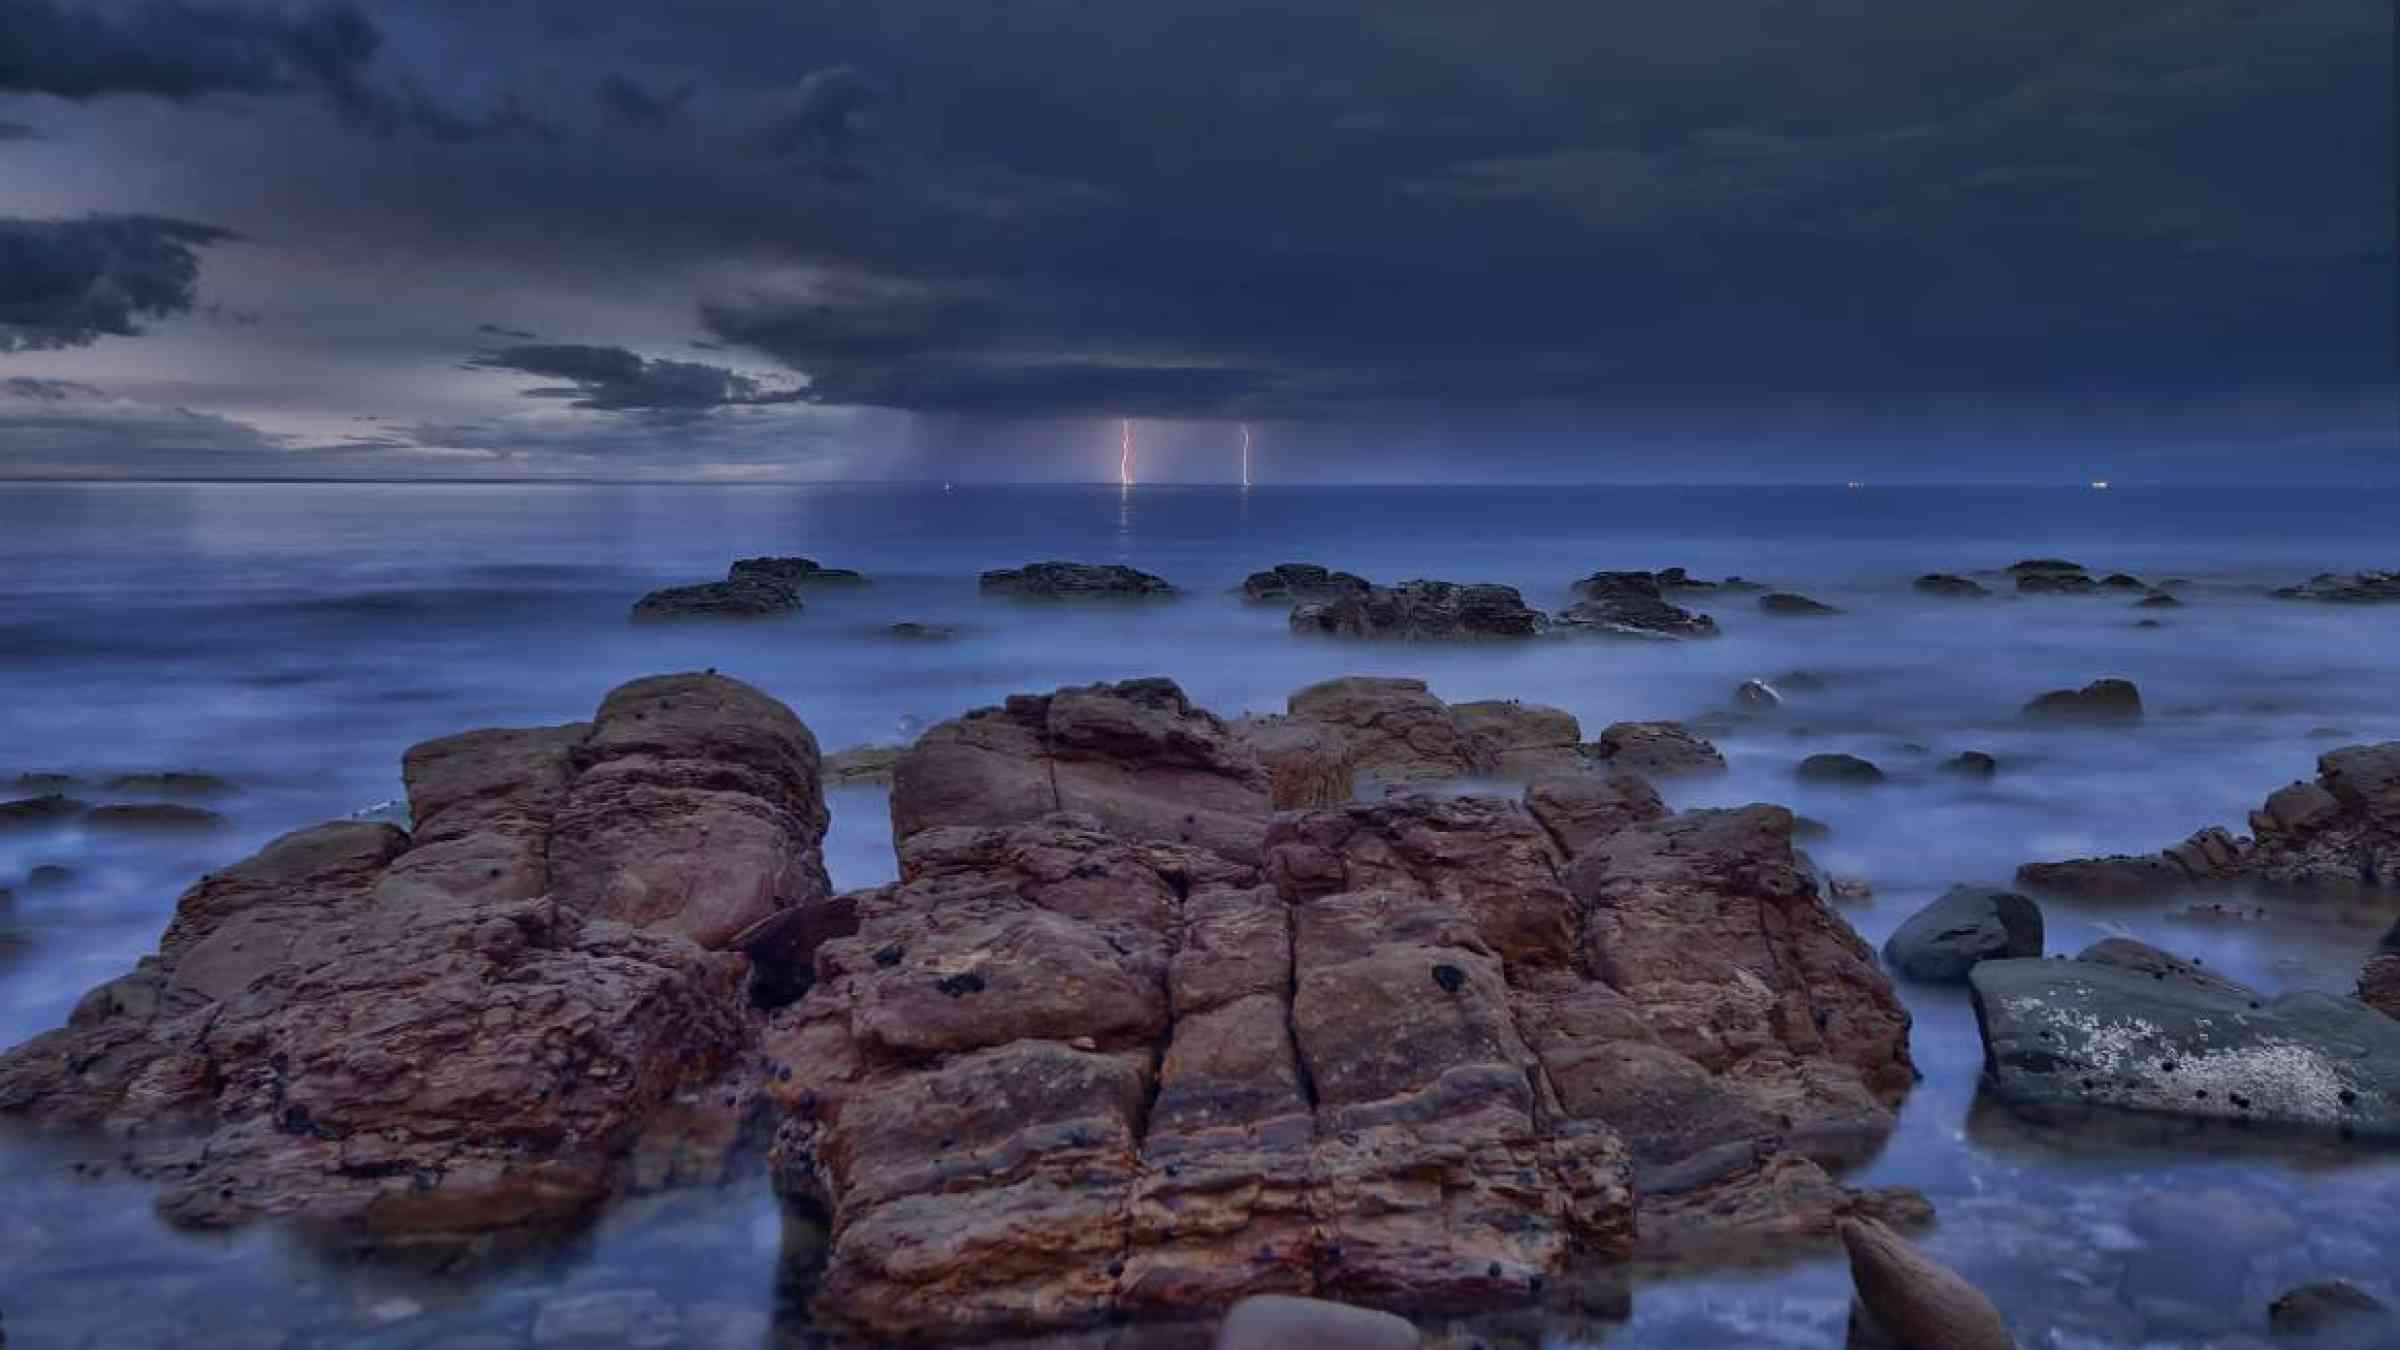 Beach storm, Adelaide Australia